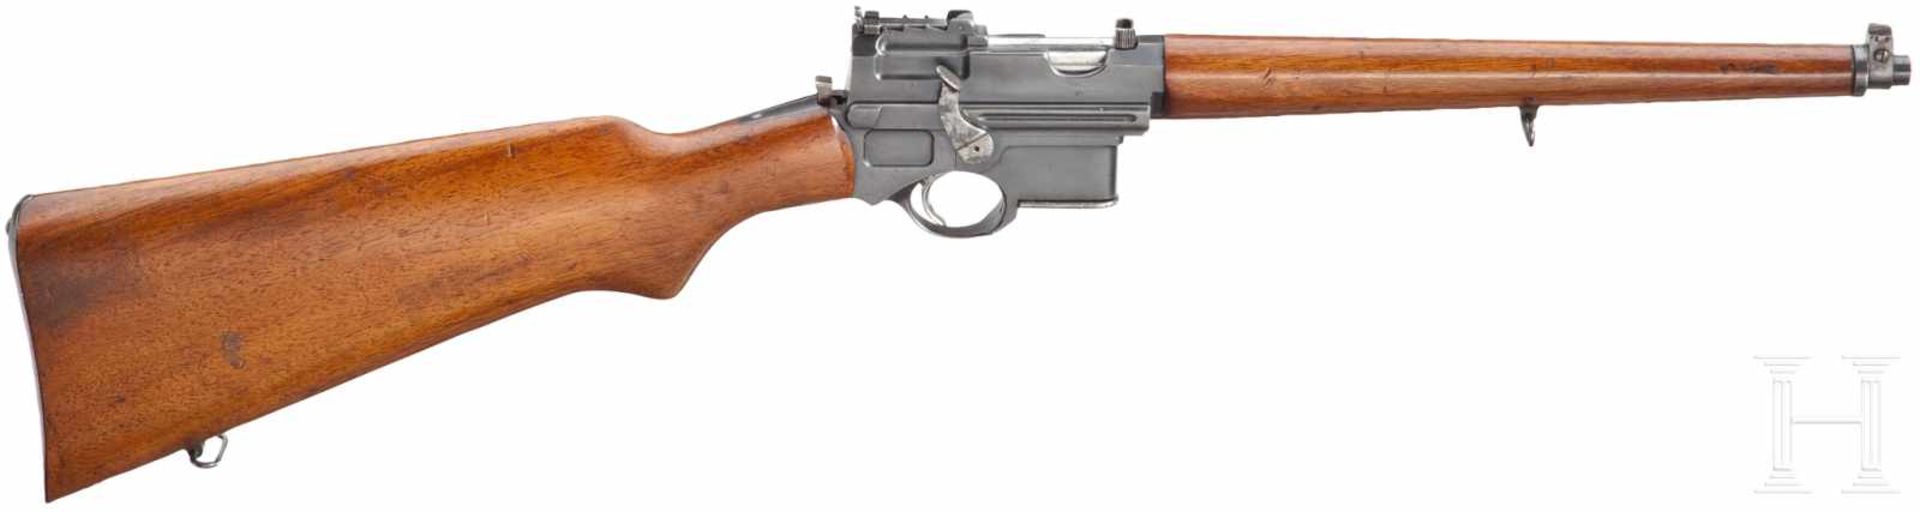 A Mannlicher self-loading pistol carbine mod. 1901